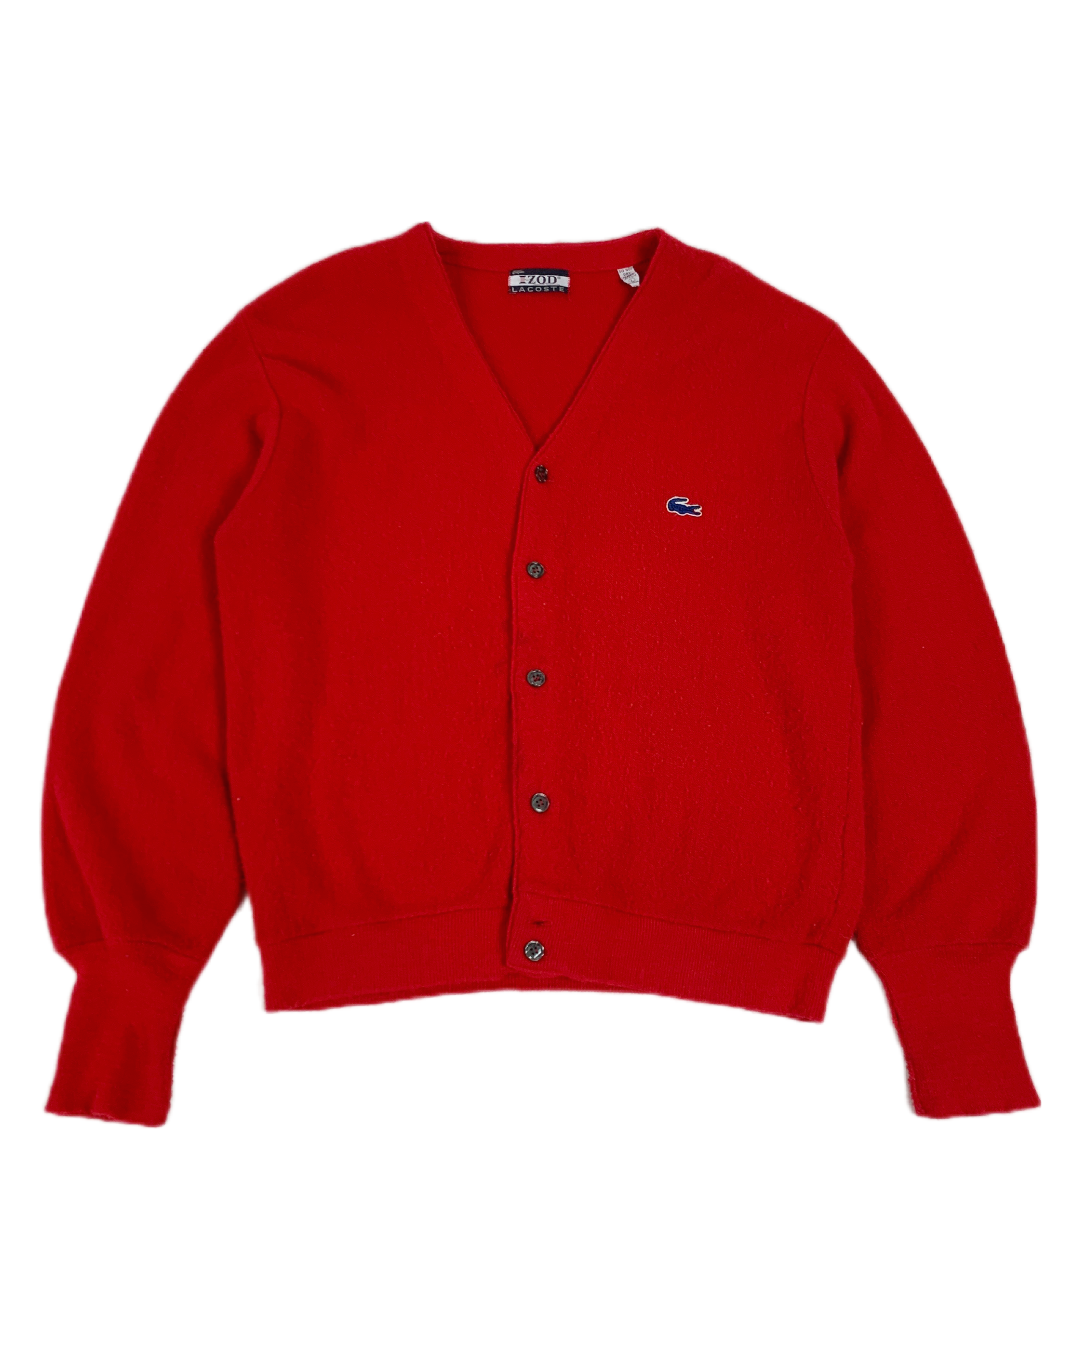 Izod Lacoste Red Vintage Cardigan - L